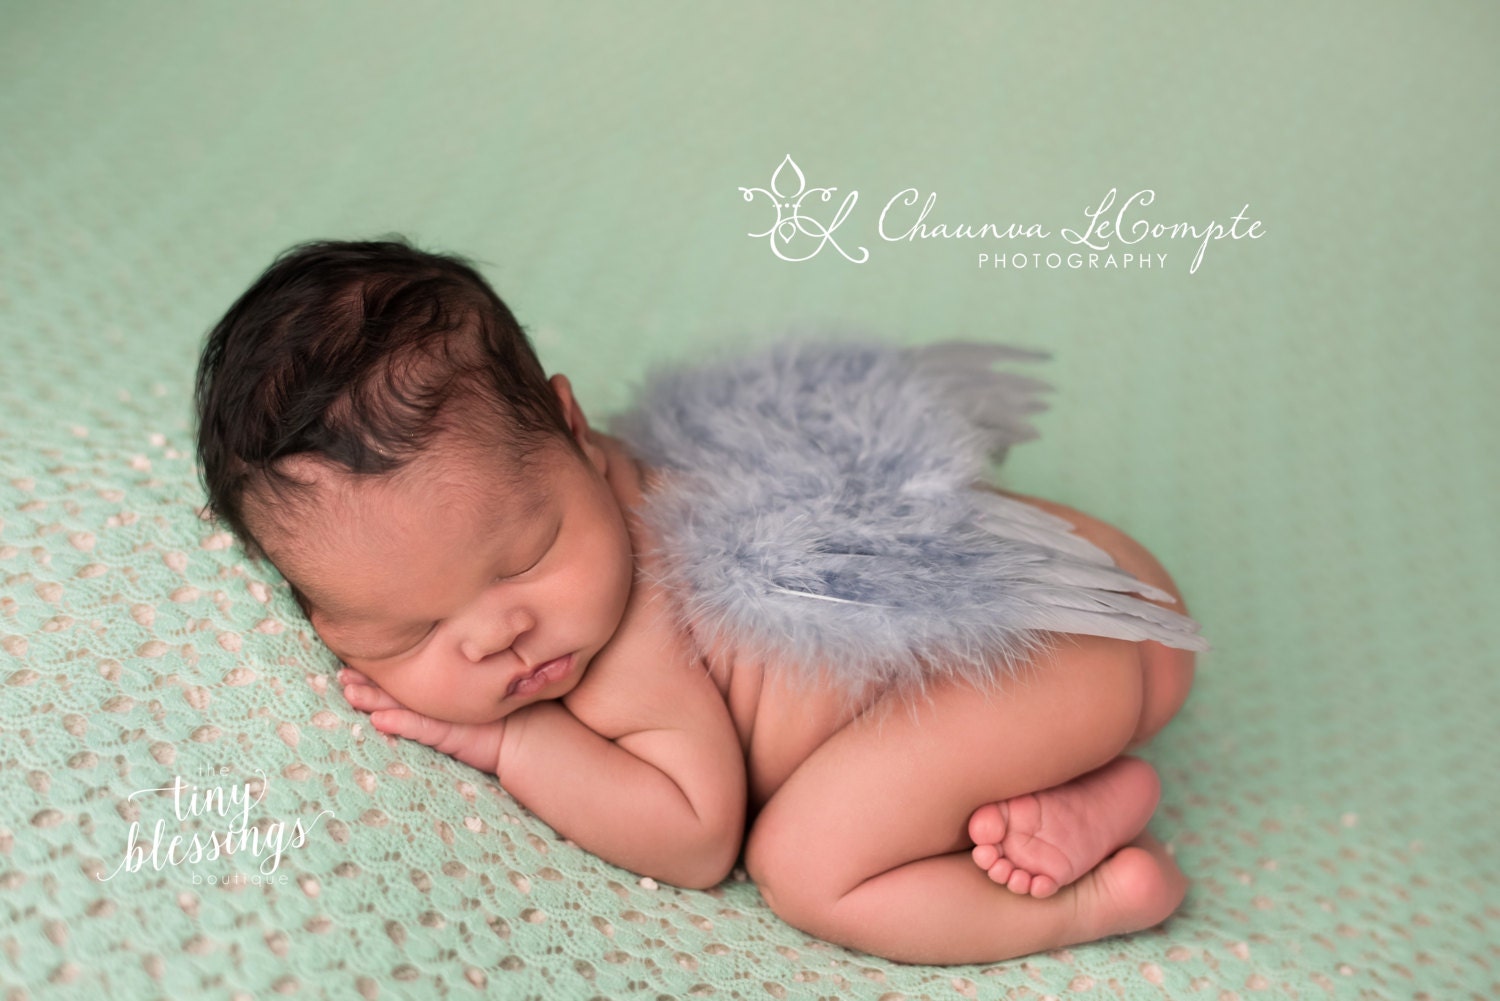 Gray Baby Wing / Baby Angel Wing Set / Baby Boy Wings / Angel Wings / Newborn Photo Prop / Newborn Wing / Newborn Angel Costume